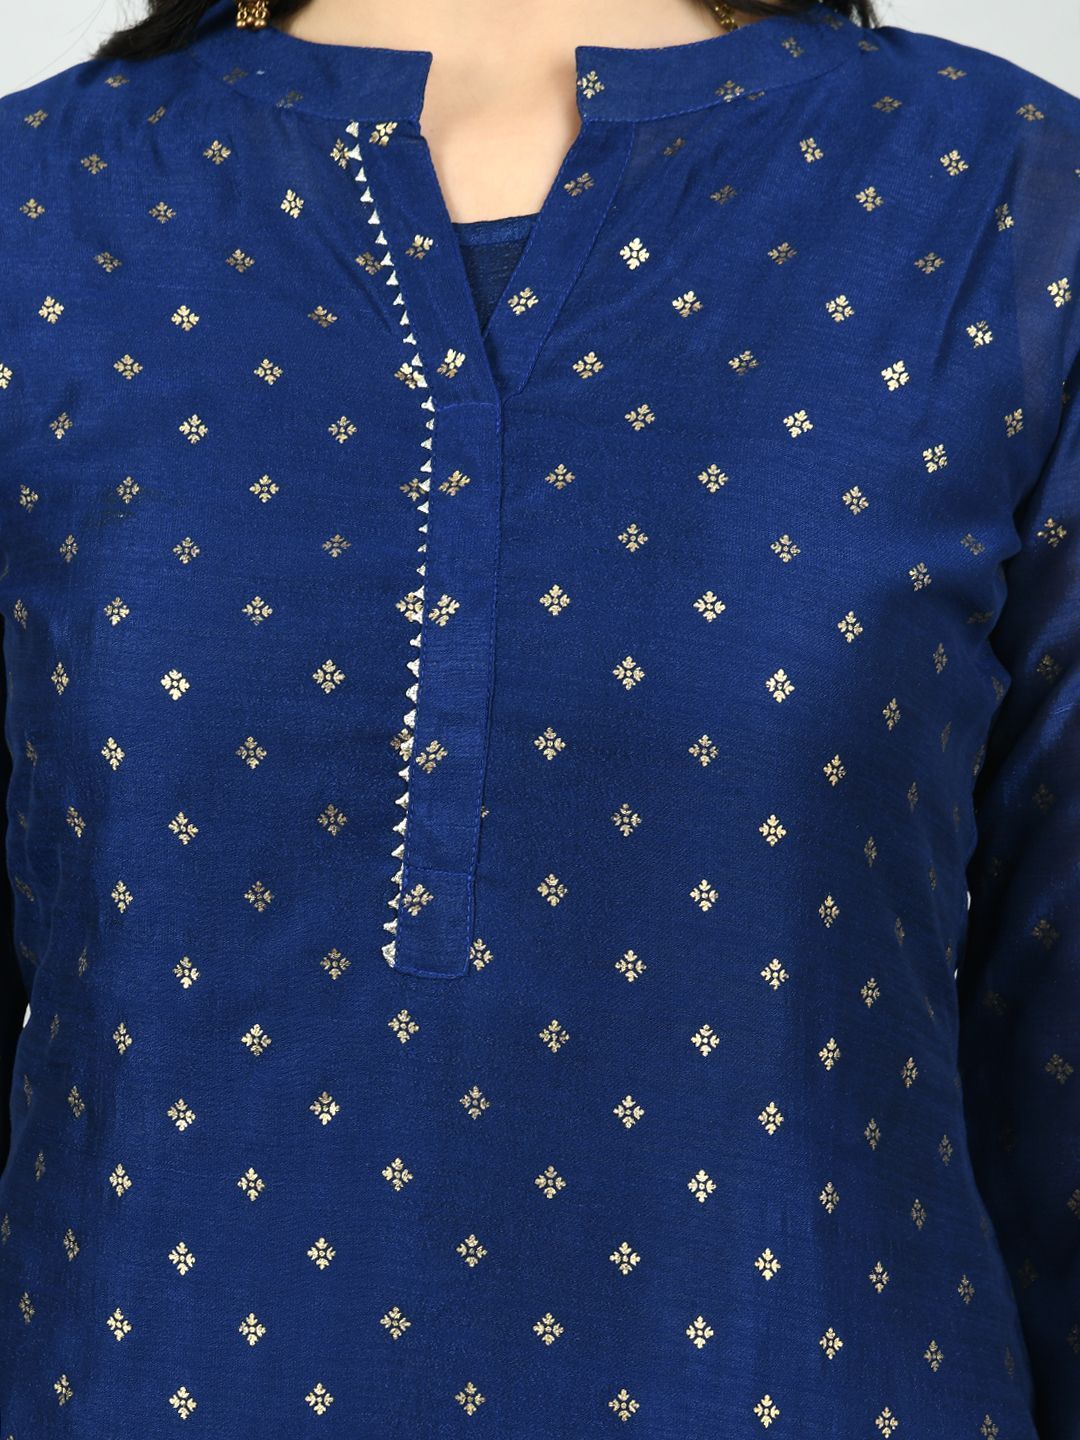 Women's Navy Blue Georgette Printed 3/4 Sleeve Mandarin Neck Casual Kurta Cammy Set - Myshka